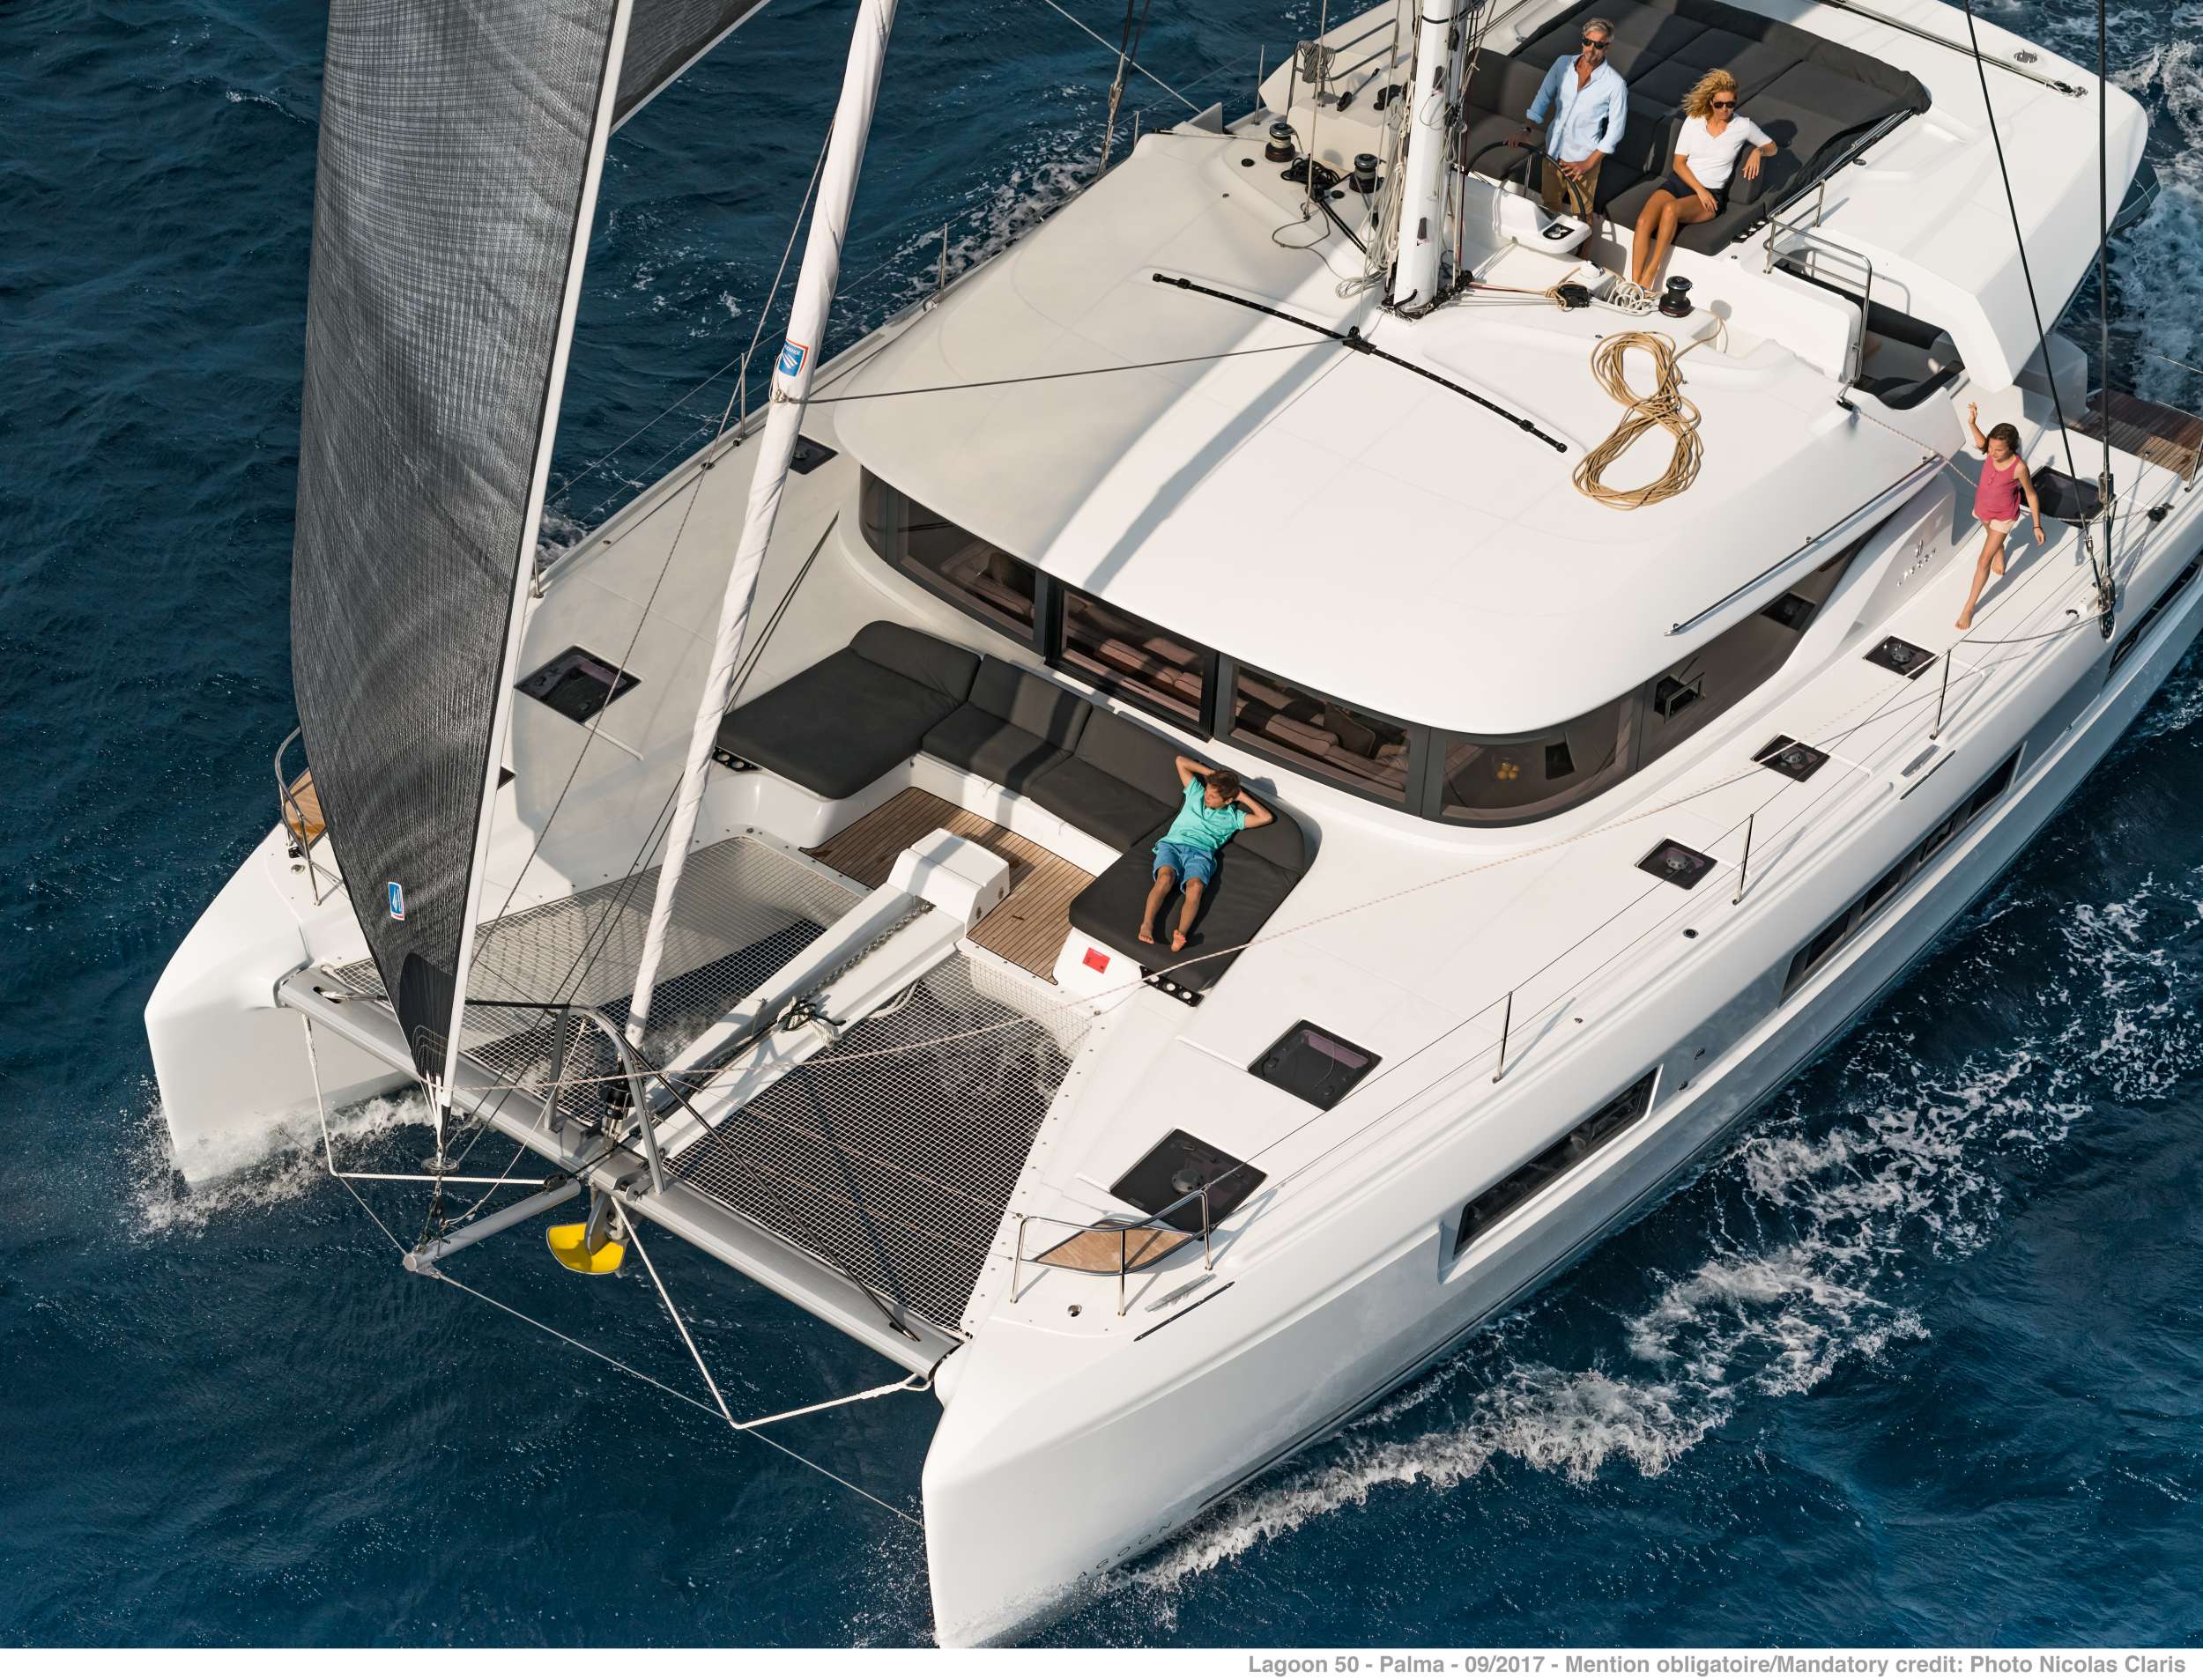 ONEIDA 2 - Yacht Charter Naxos & Boat hire in Greece 6